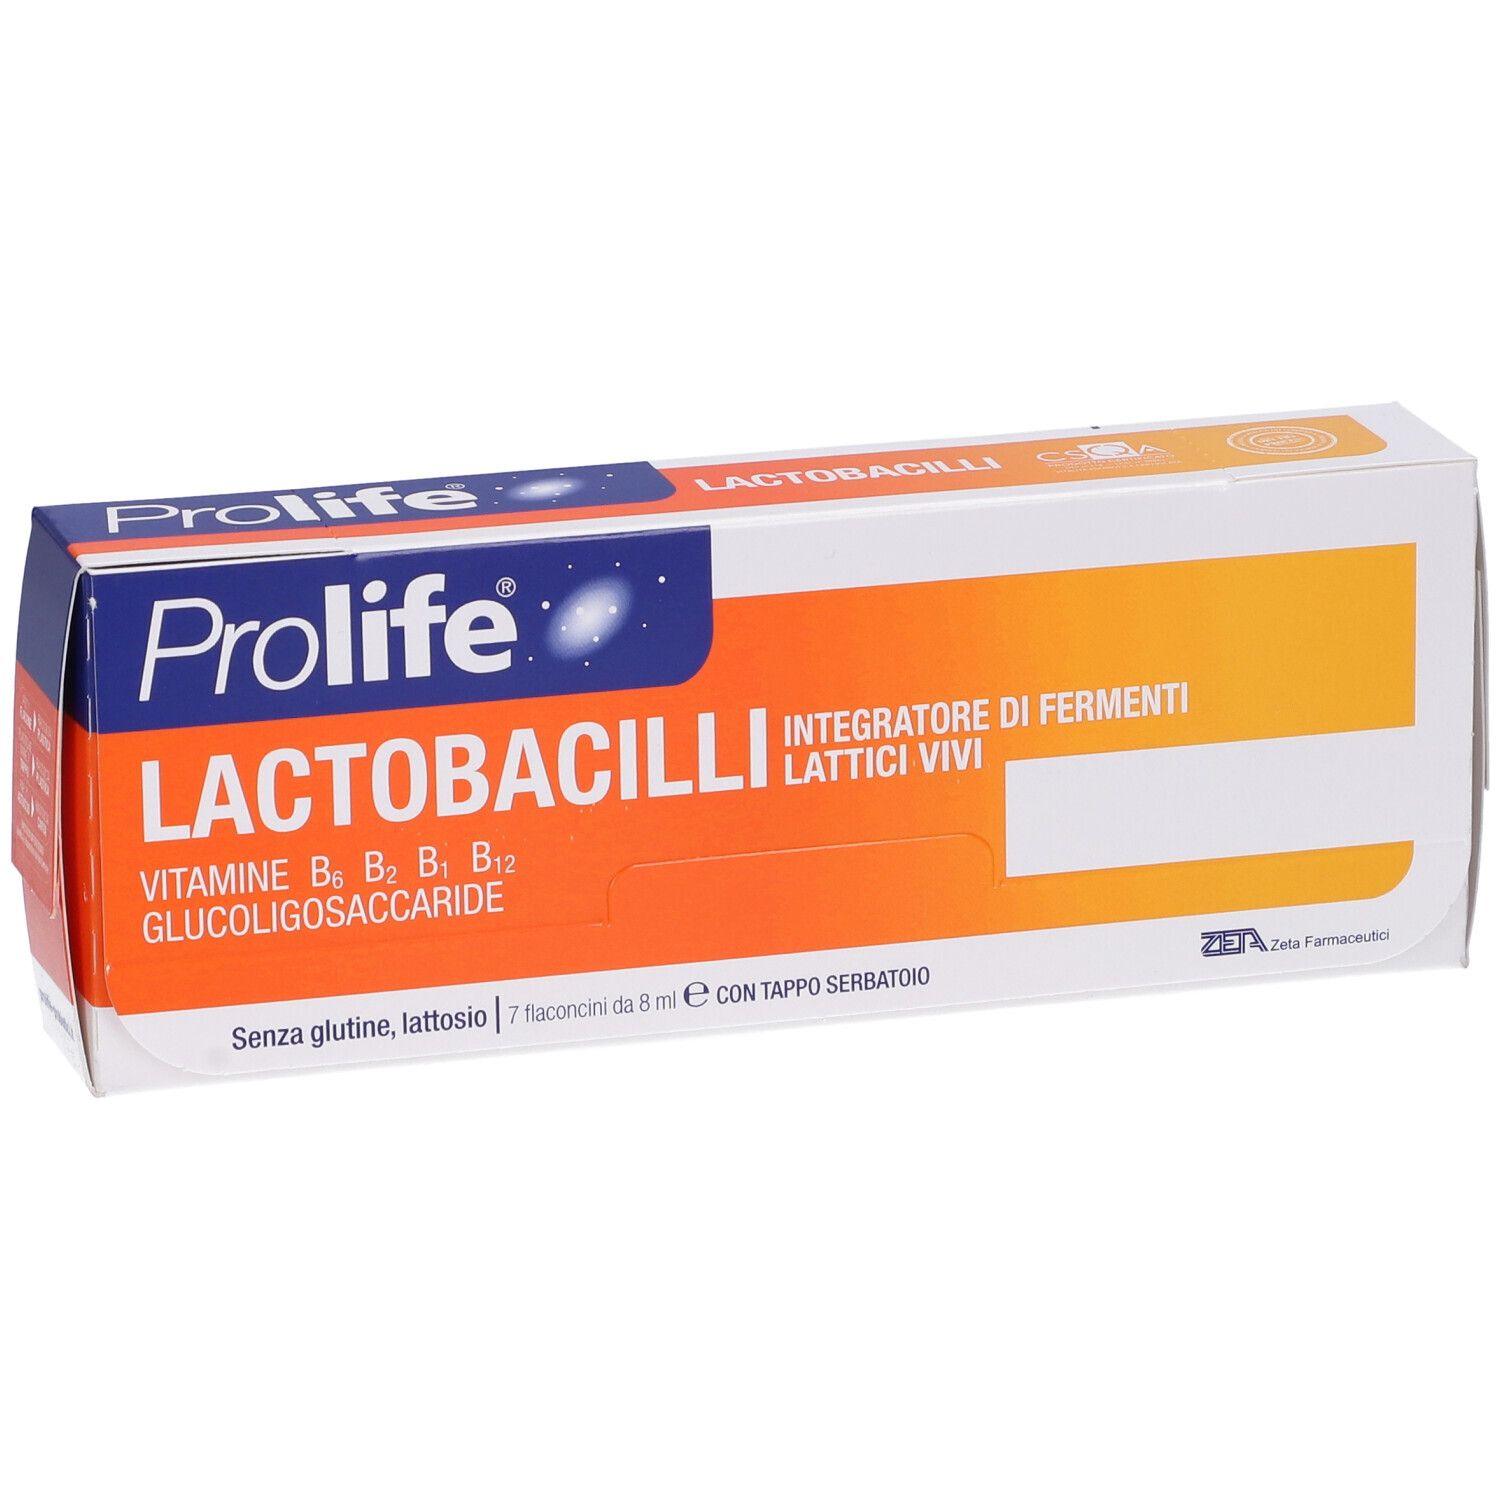 Image of ProLife(R) Lactobacilli Zeta Farmaceutici 7 Flaconcini Da 8ml